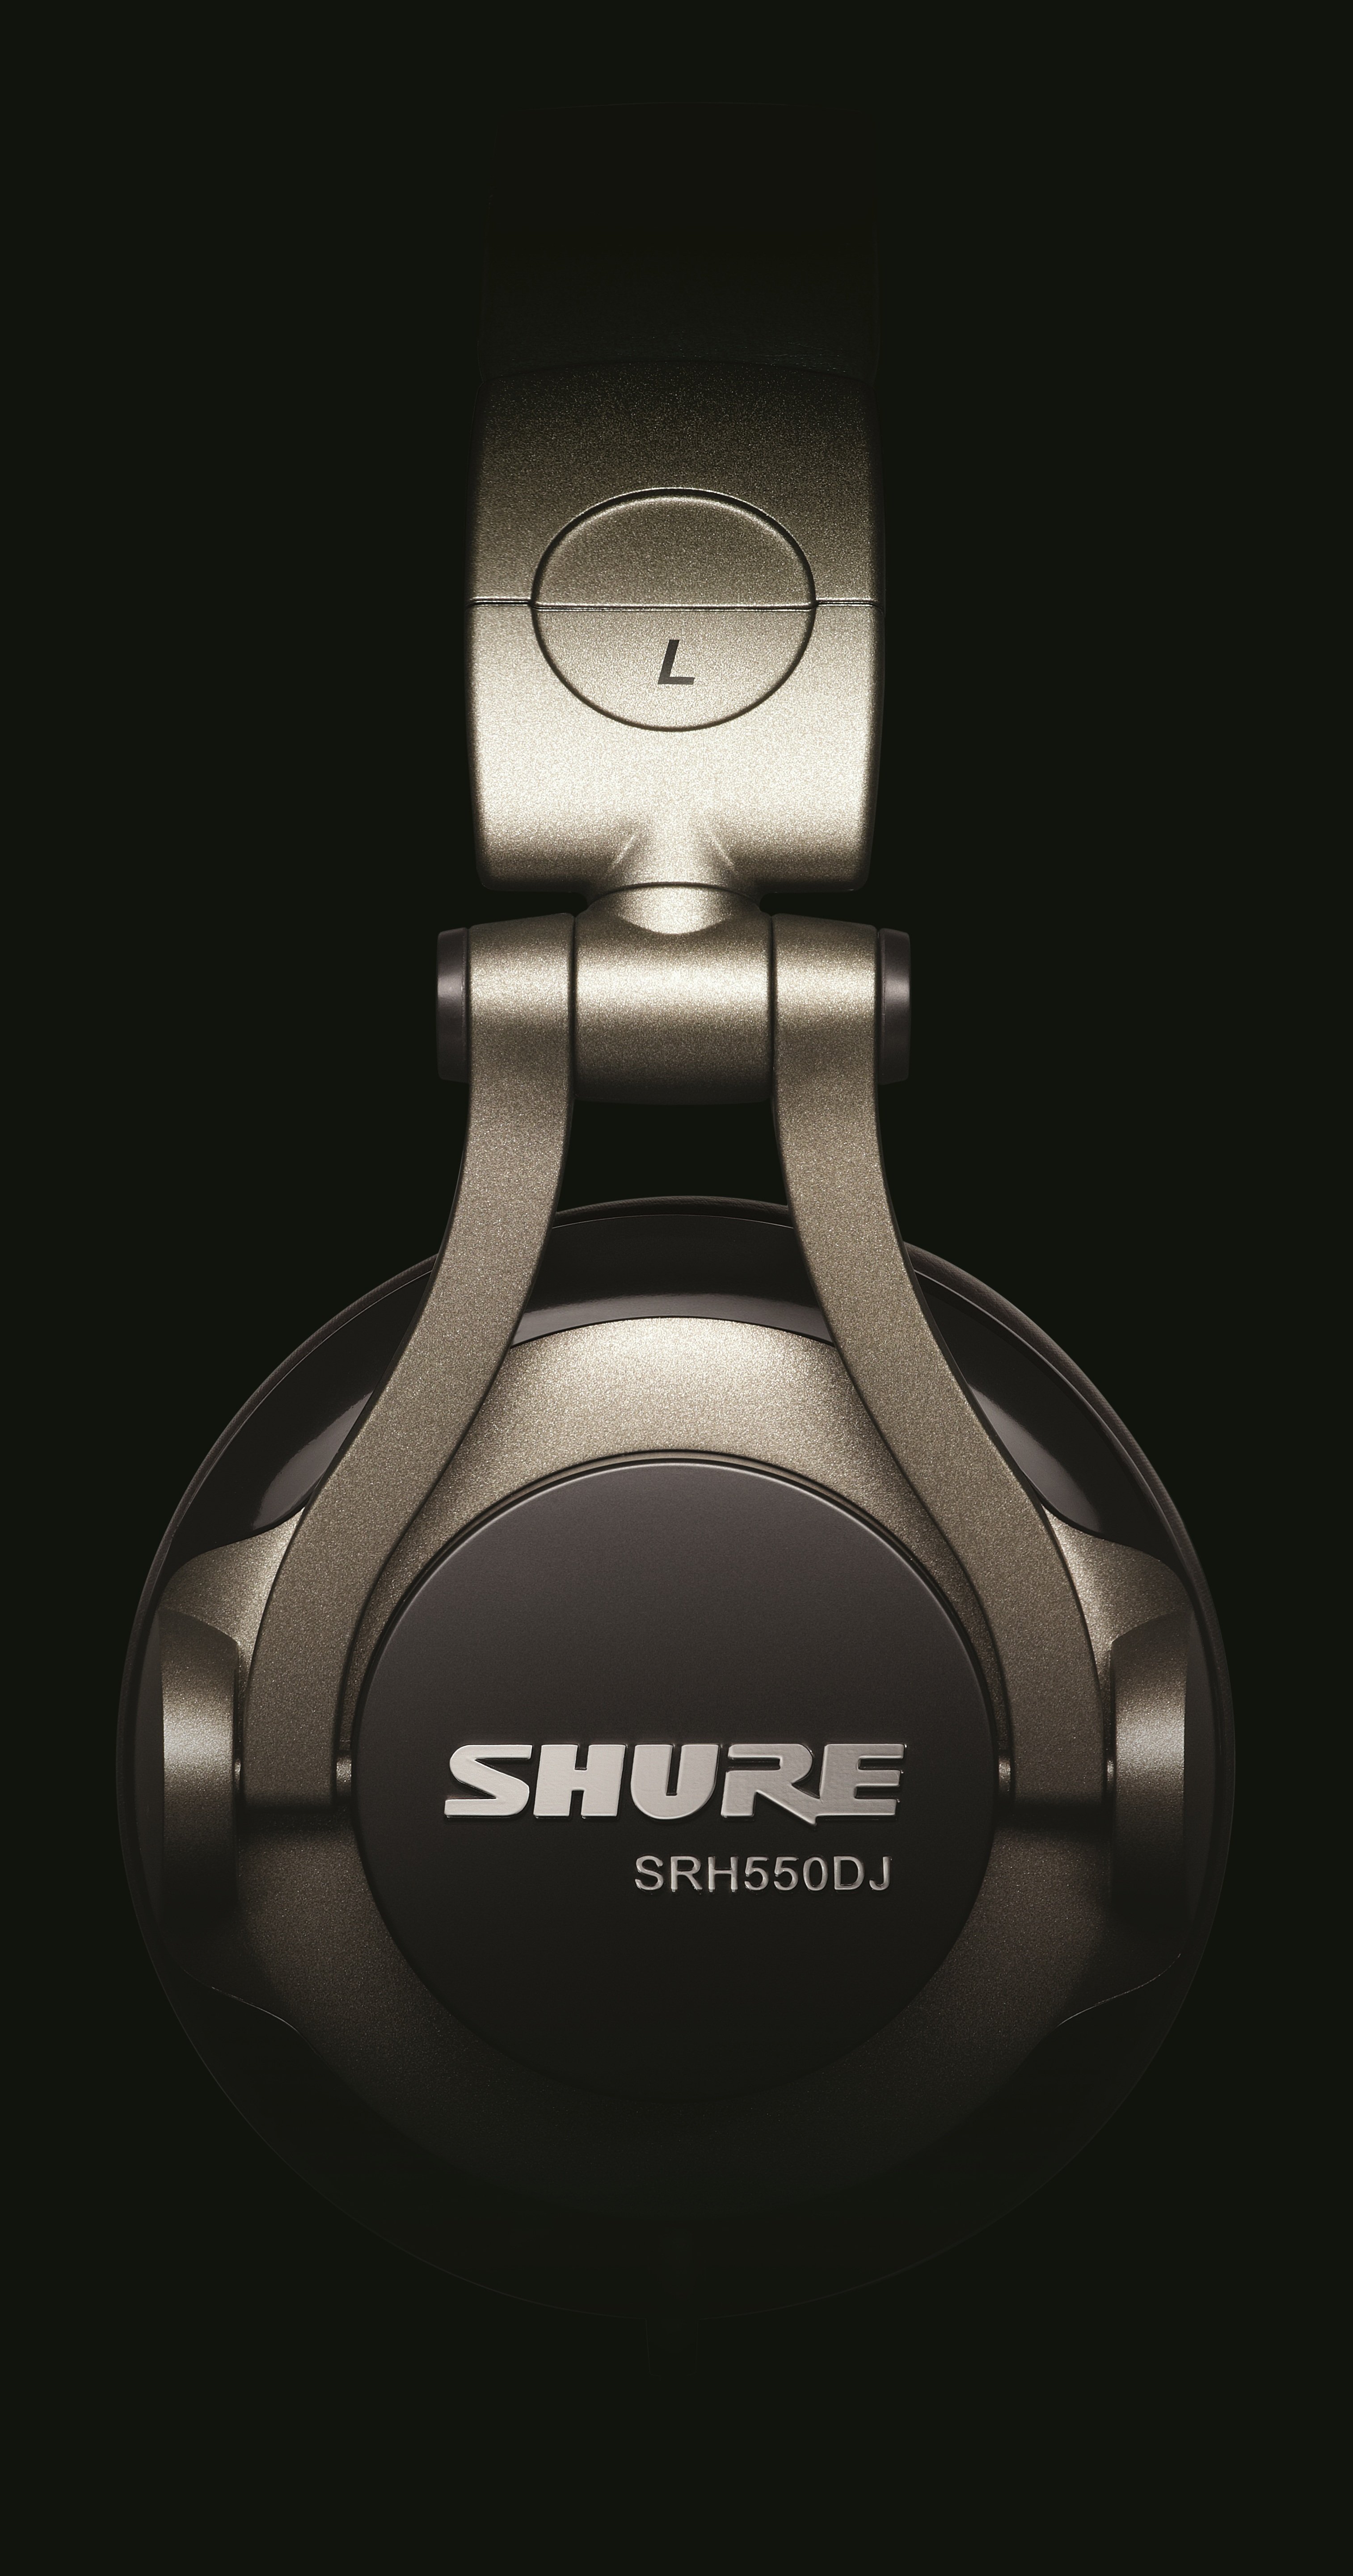 shure srh550dj professional quality dj headphones review